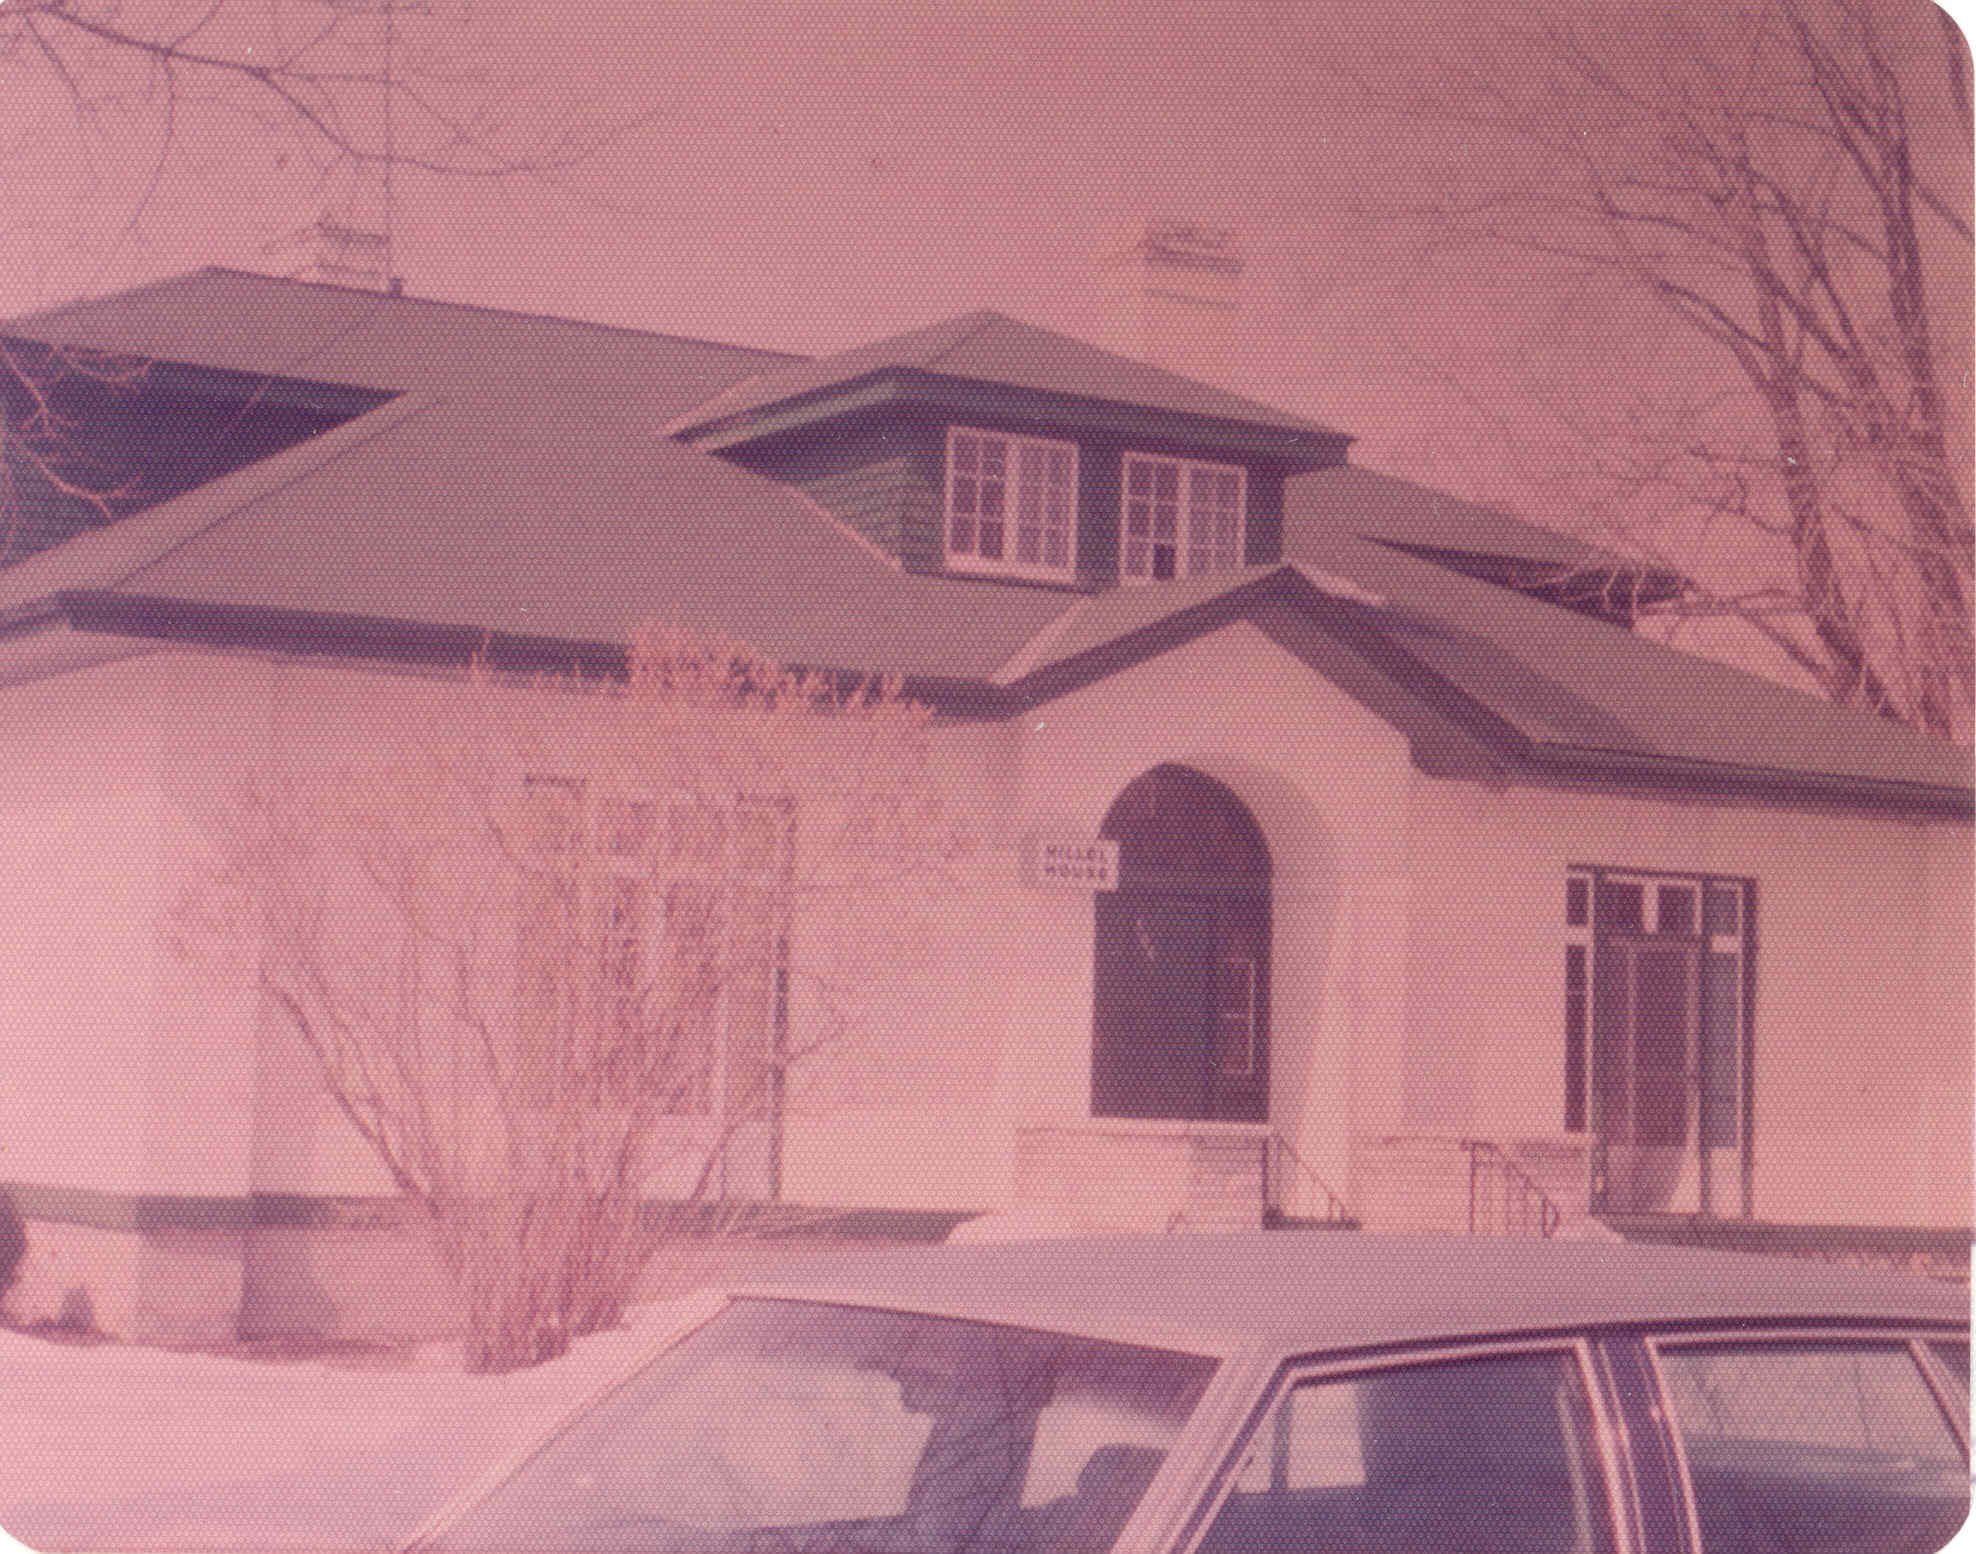 Hillel House on Centre Street in Kingston, Ontario